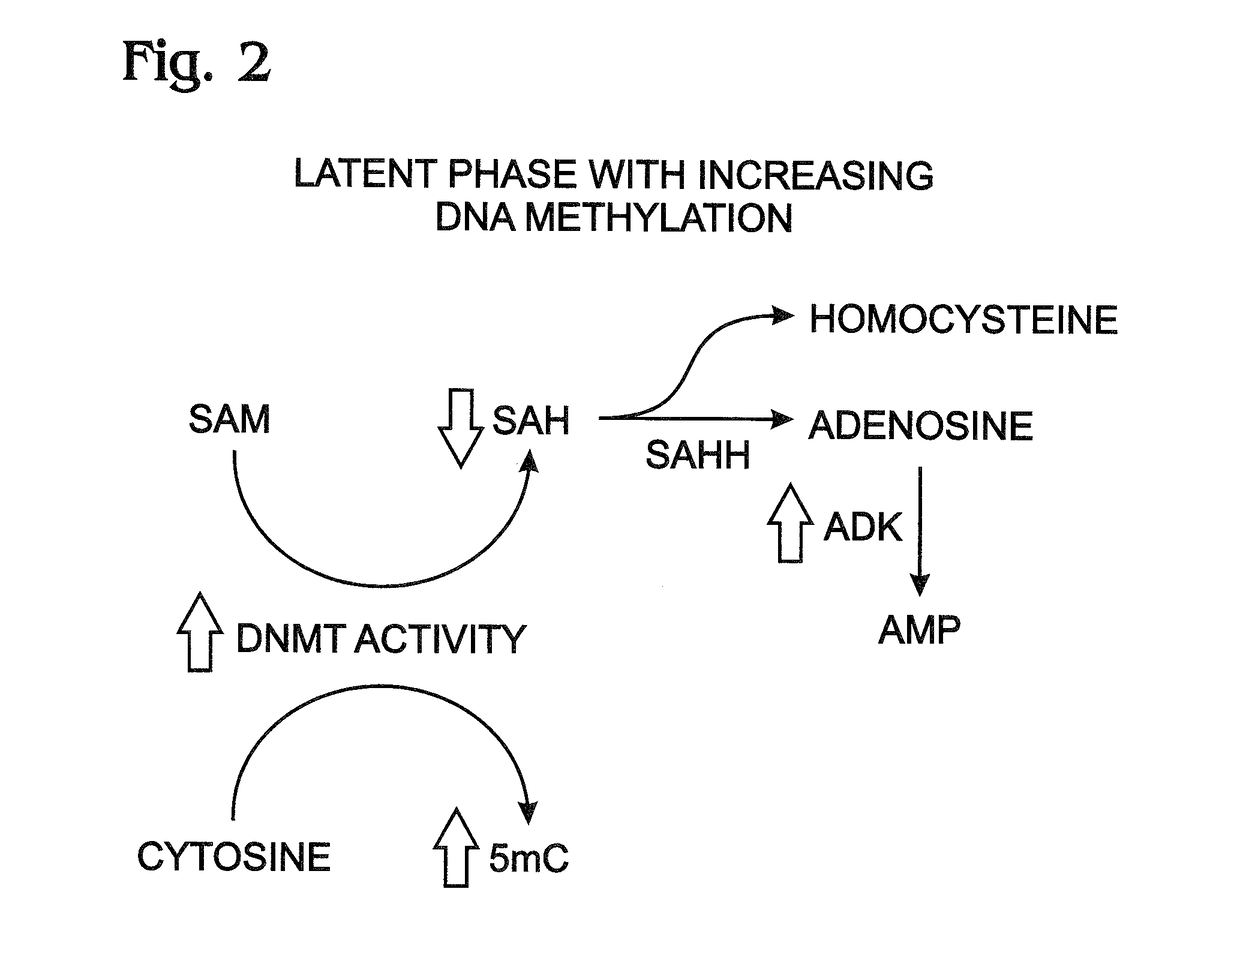 Transient inhibition of adenosine kinase as an Anti-epileptogenesis treatment